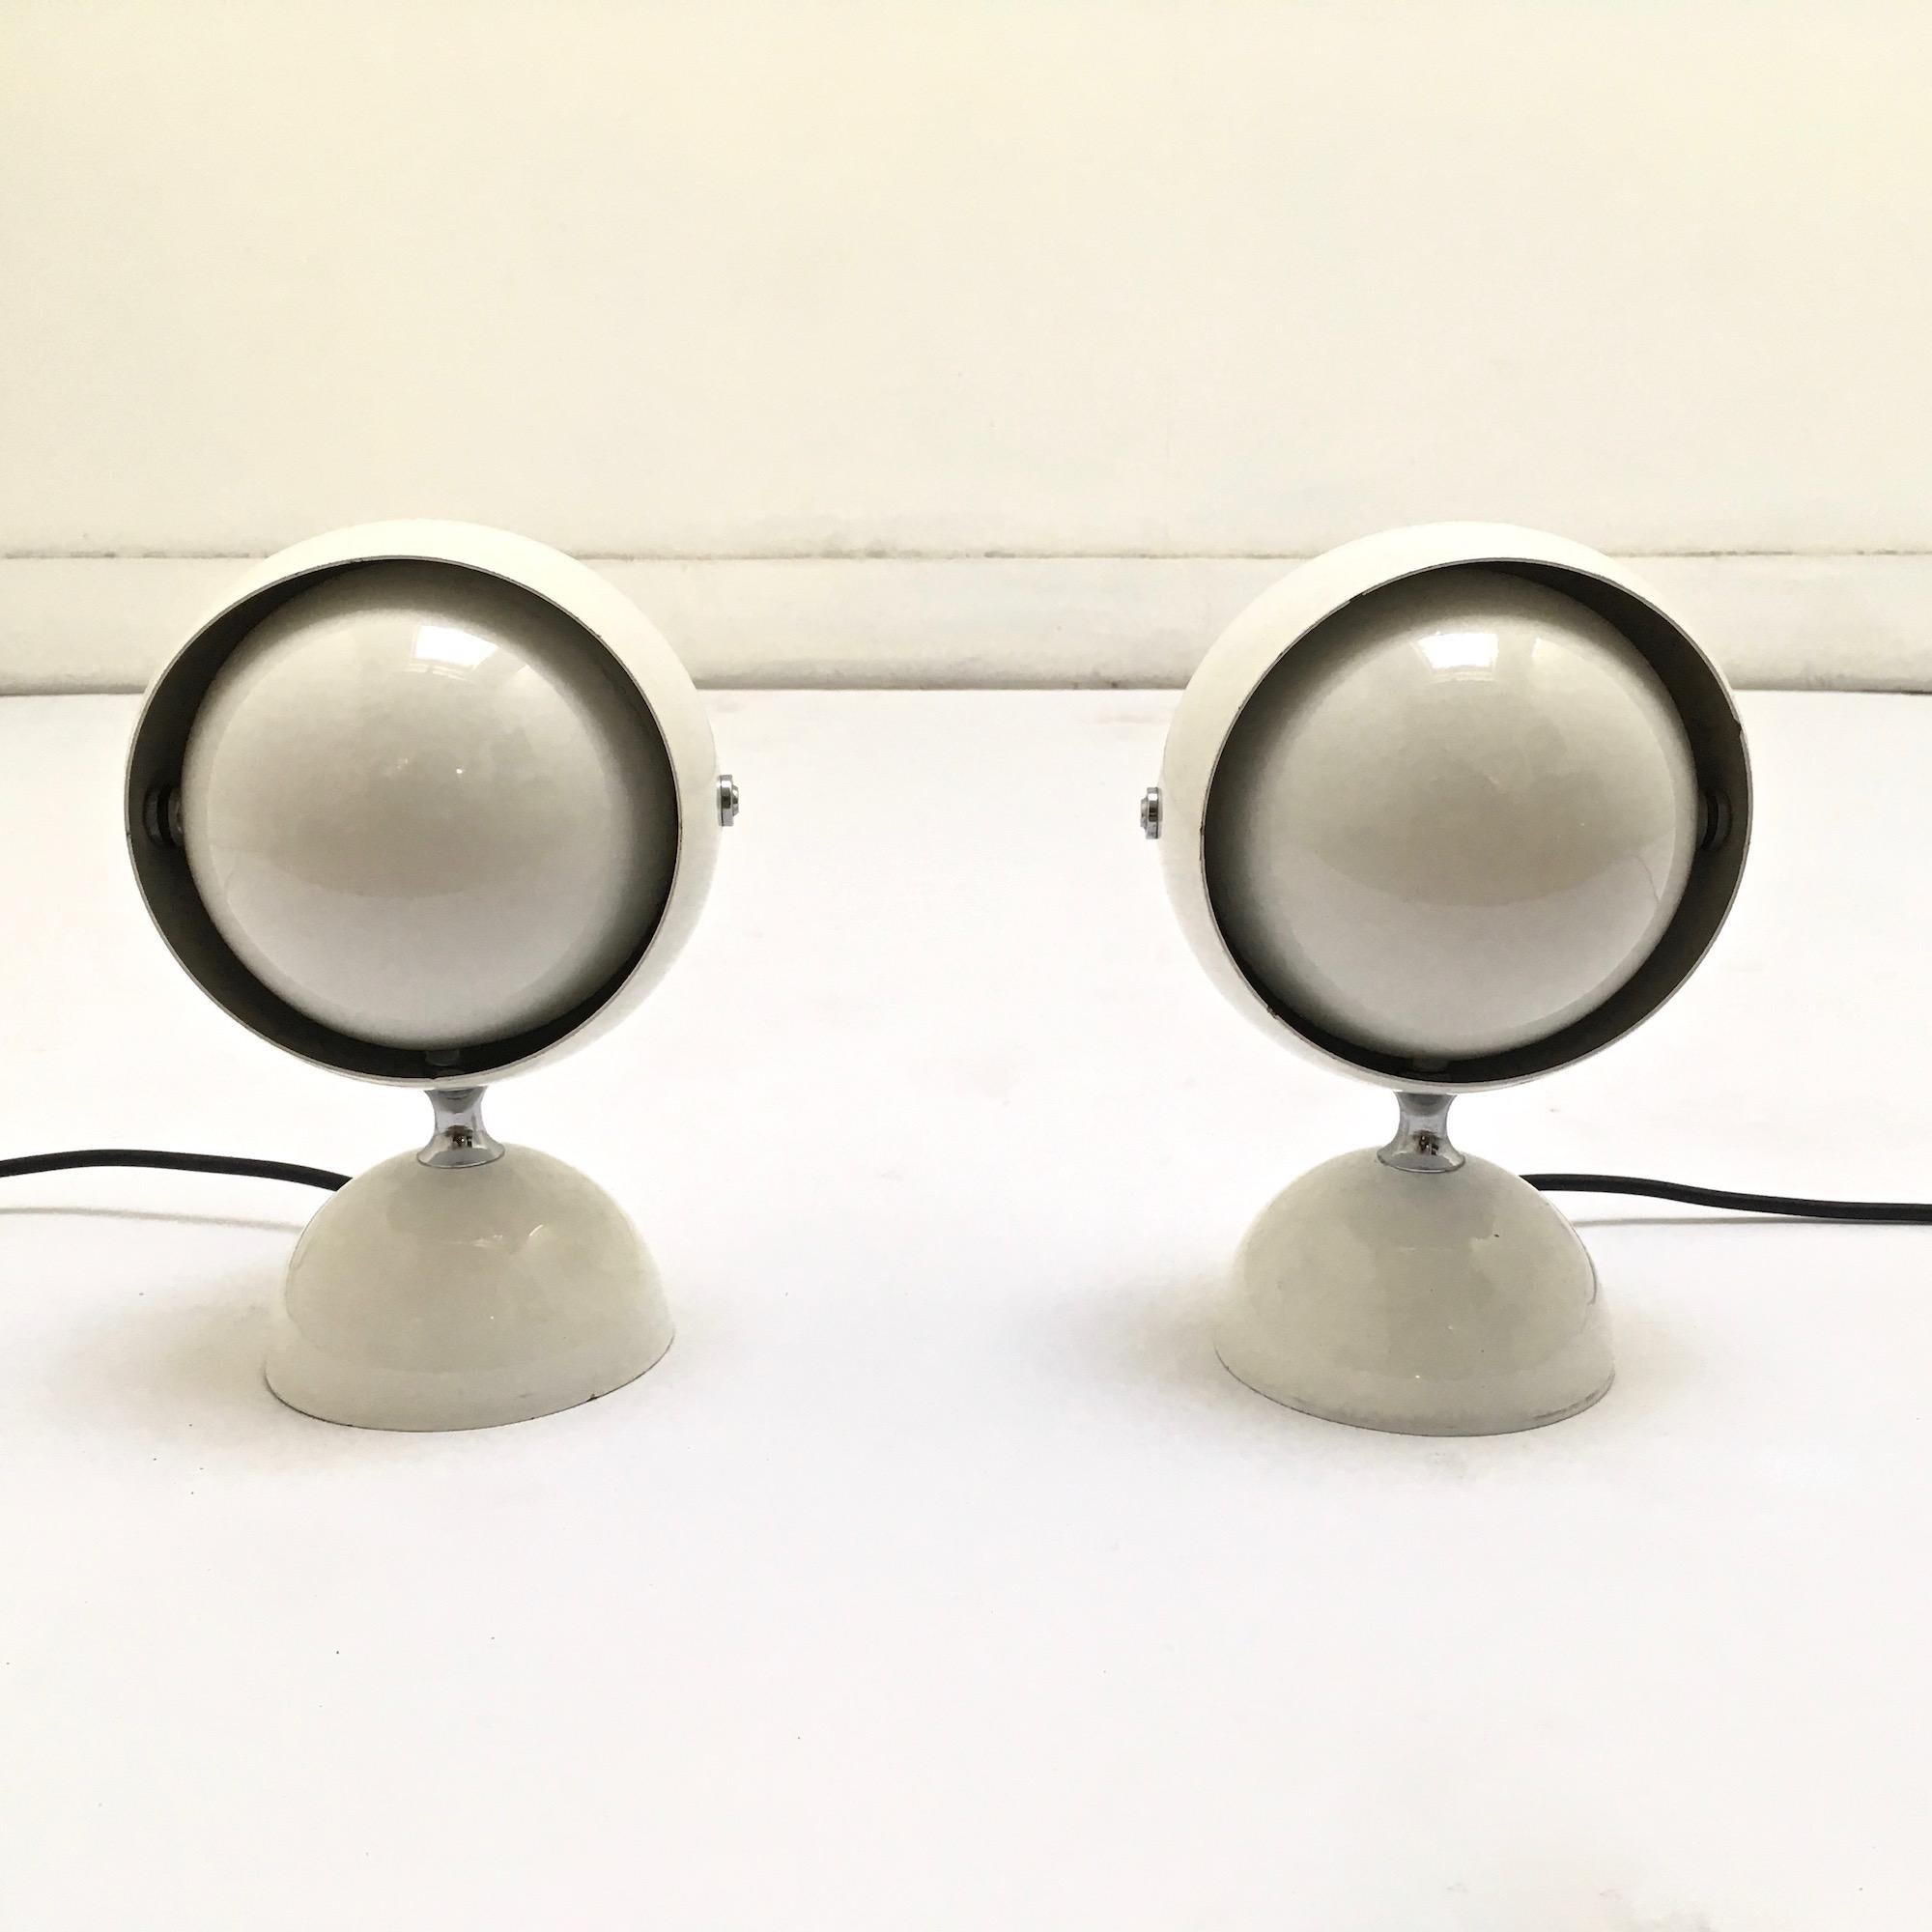 Set of two eye ball lamps, circa 1970, white color.